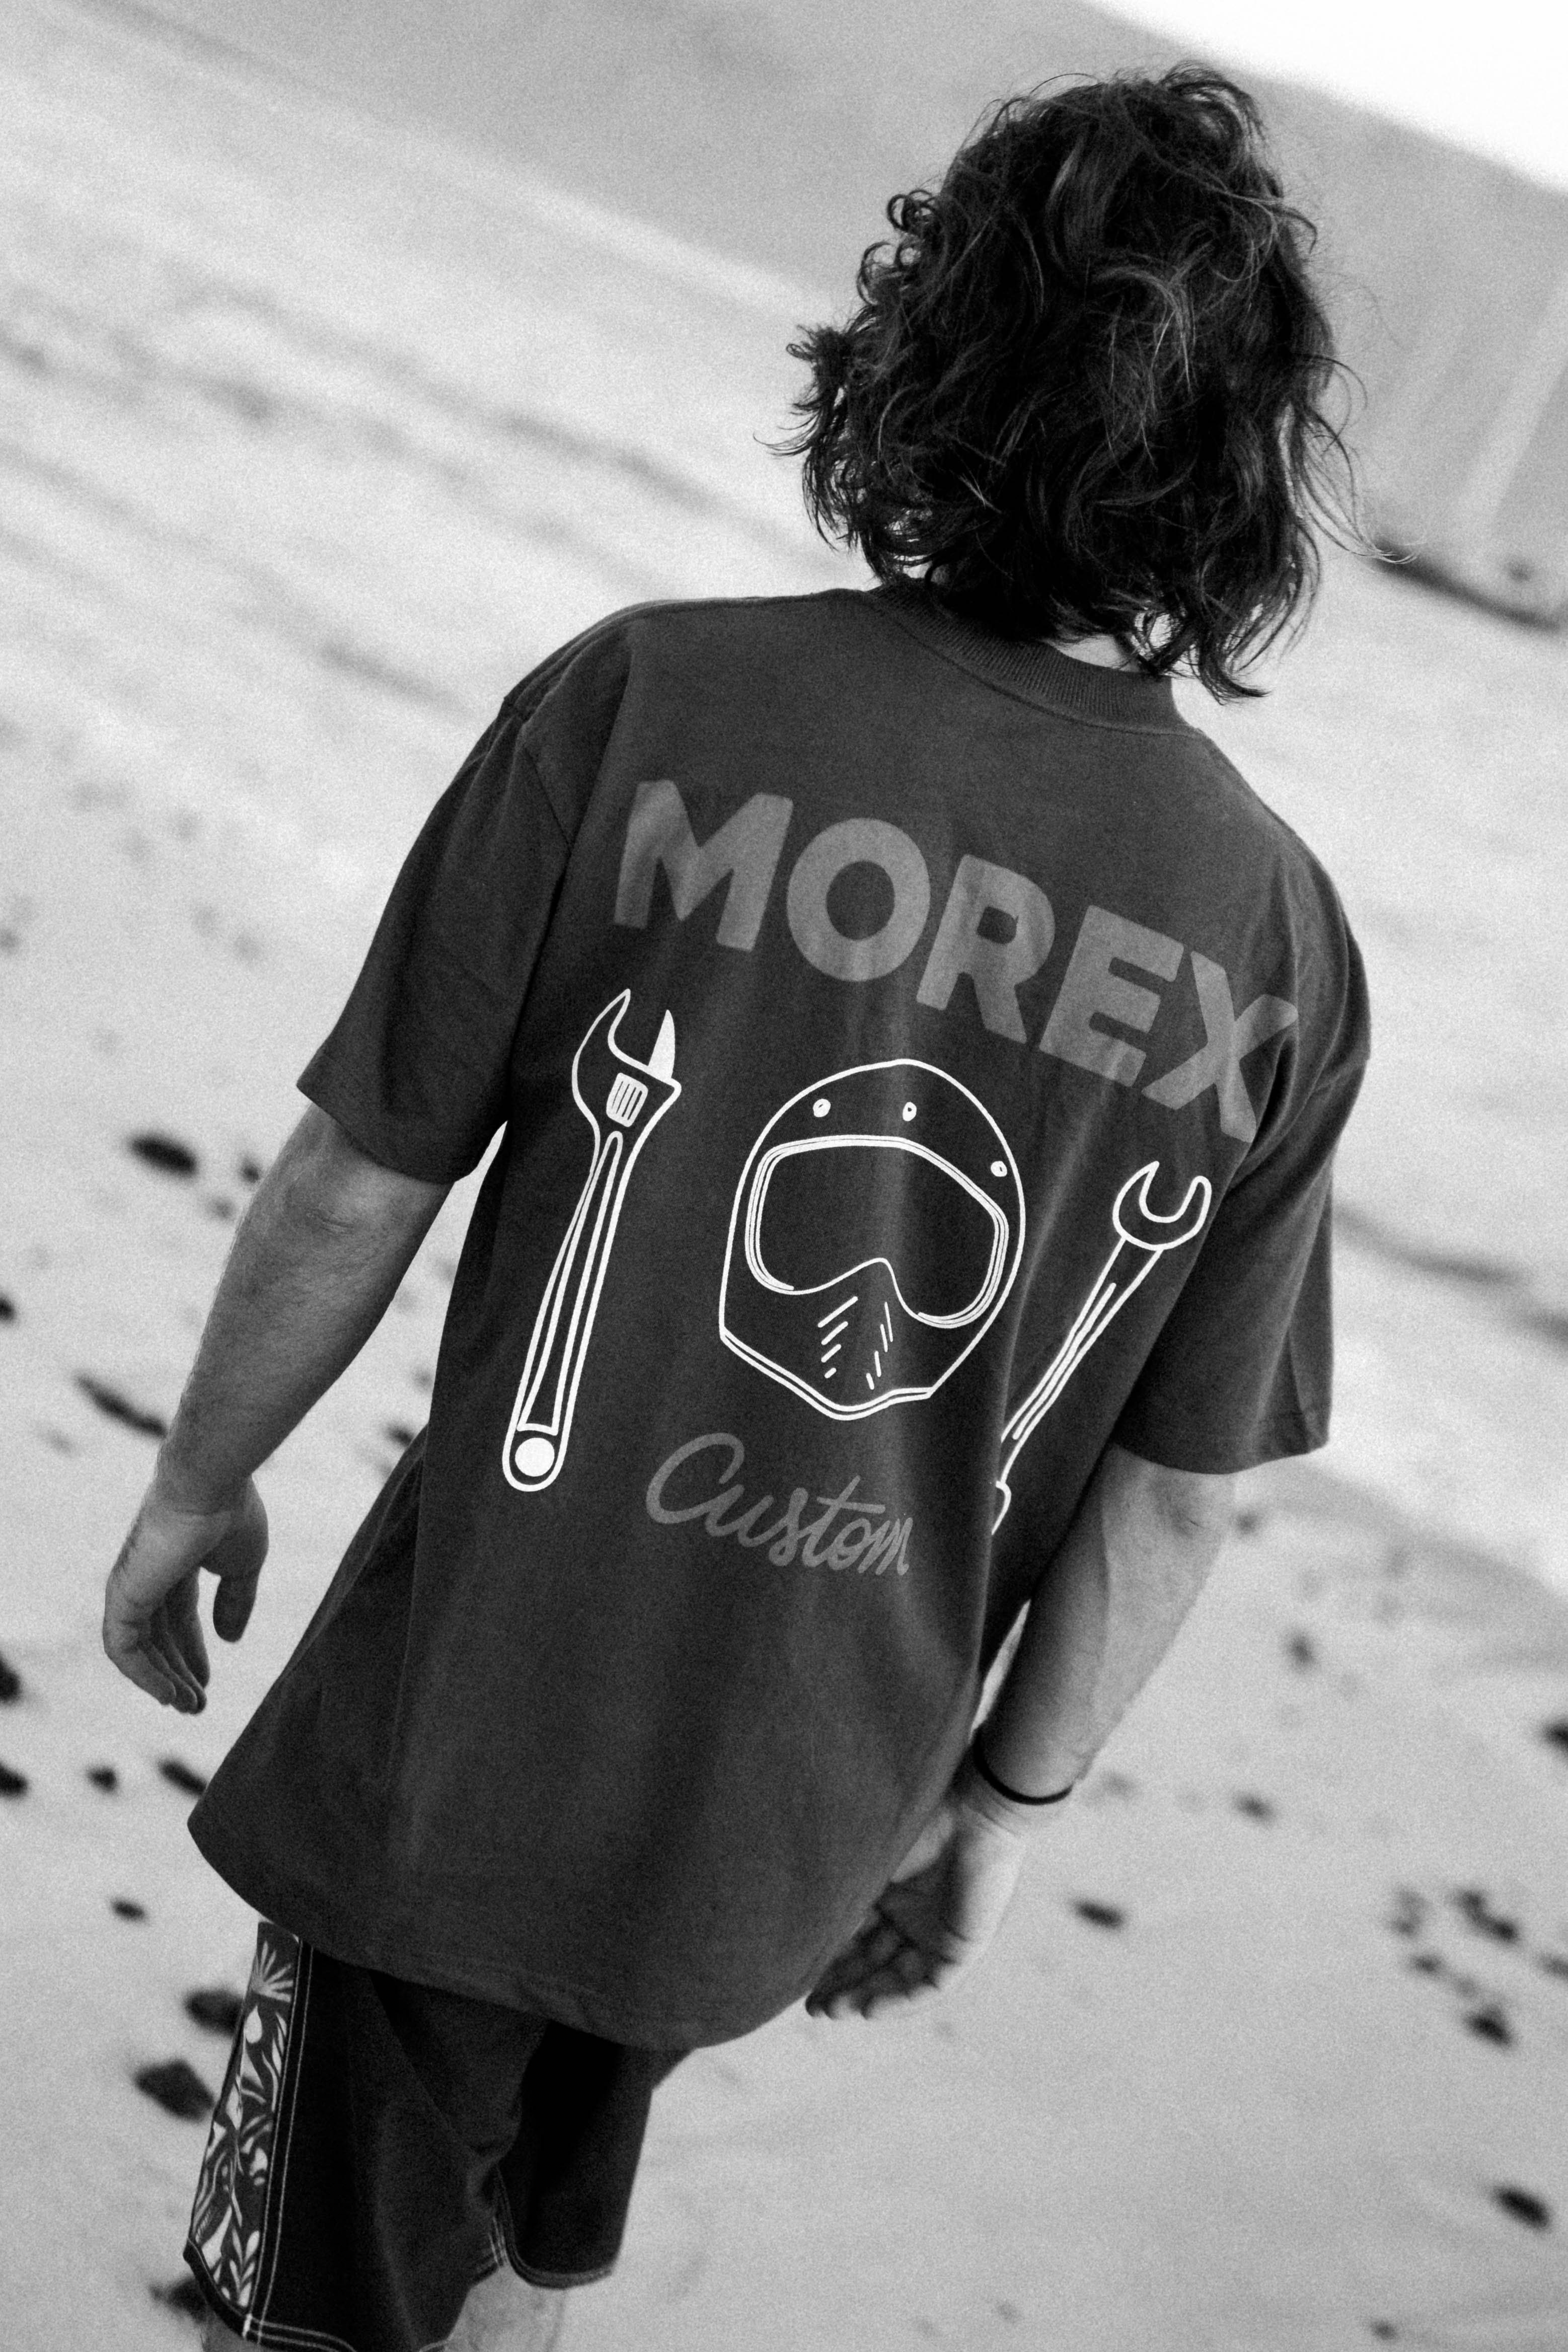 Morex custom t-shirt